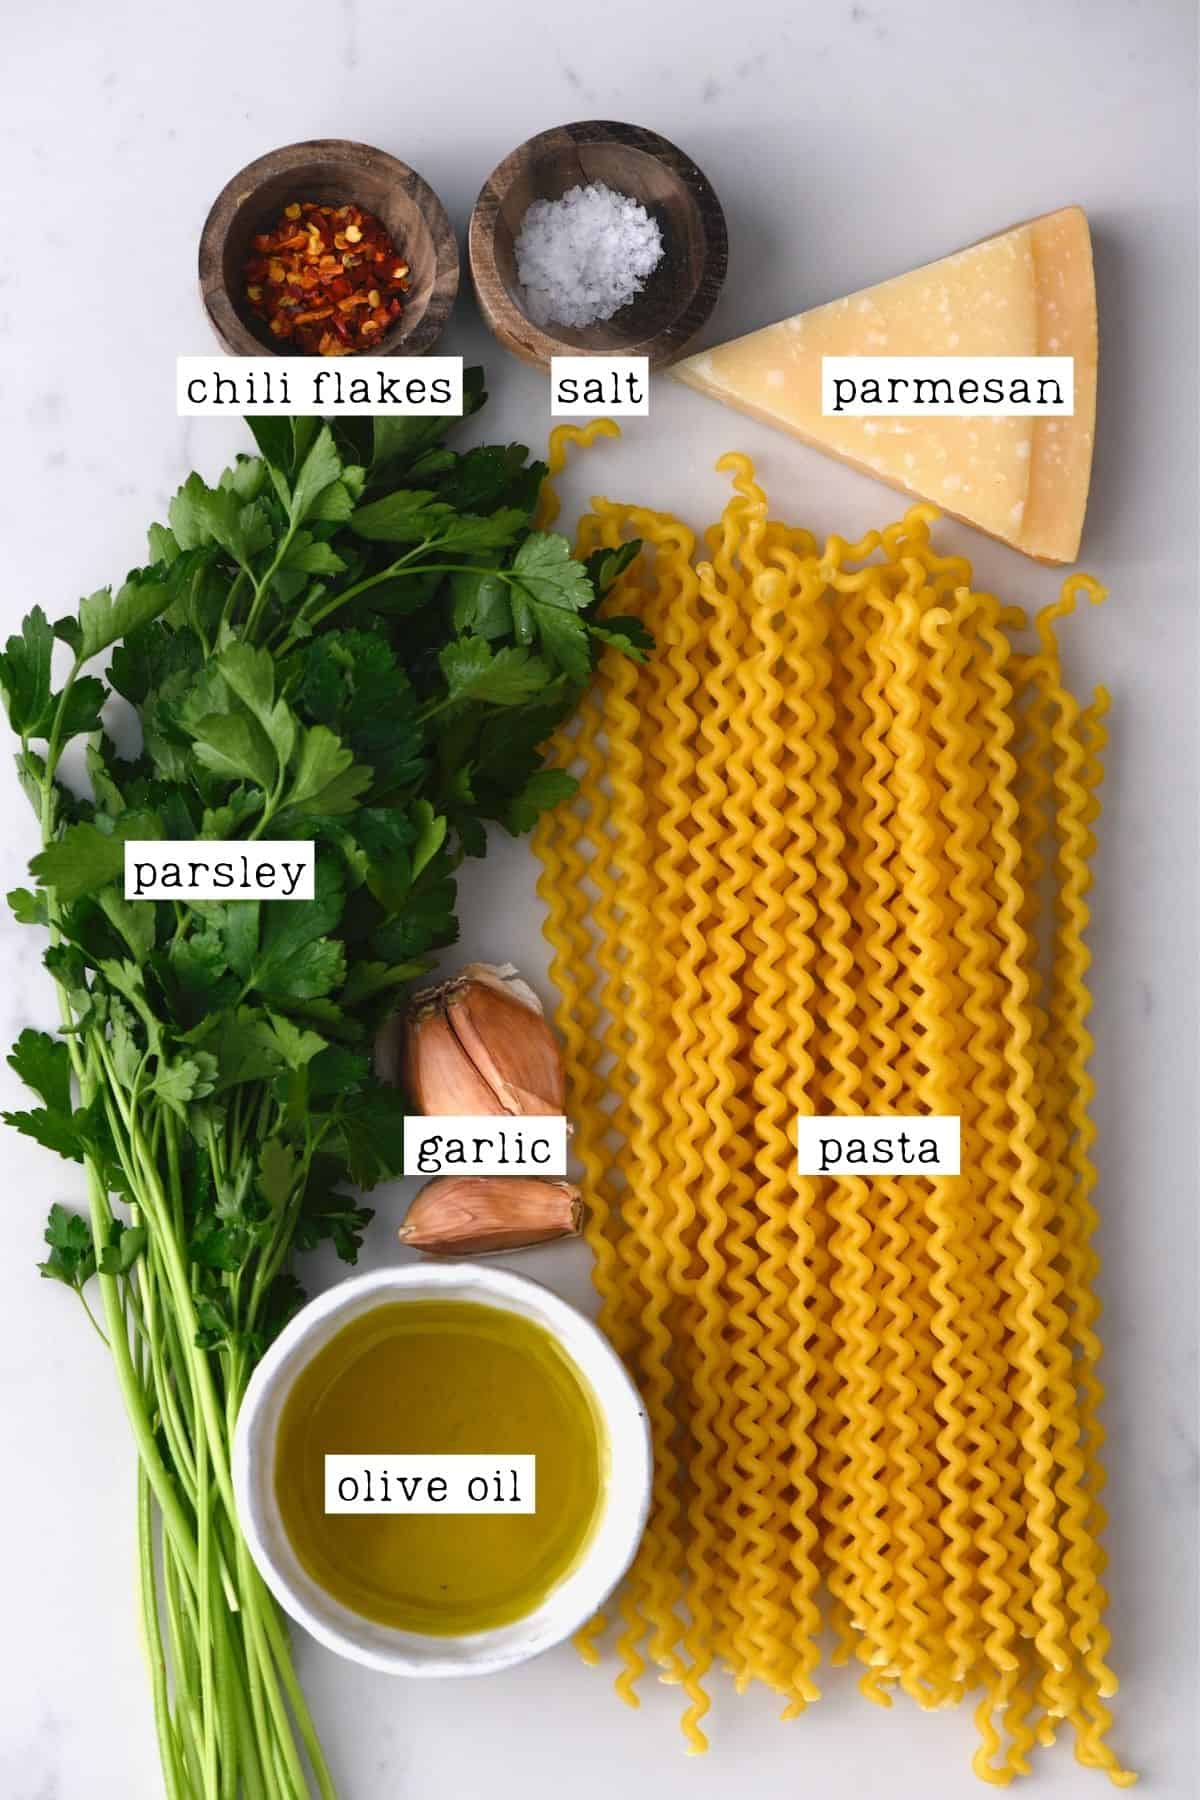 Ingredients for garlic olive oil pasta